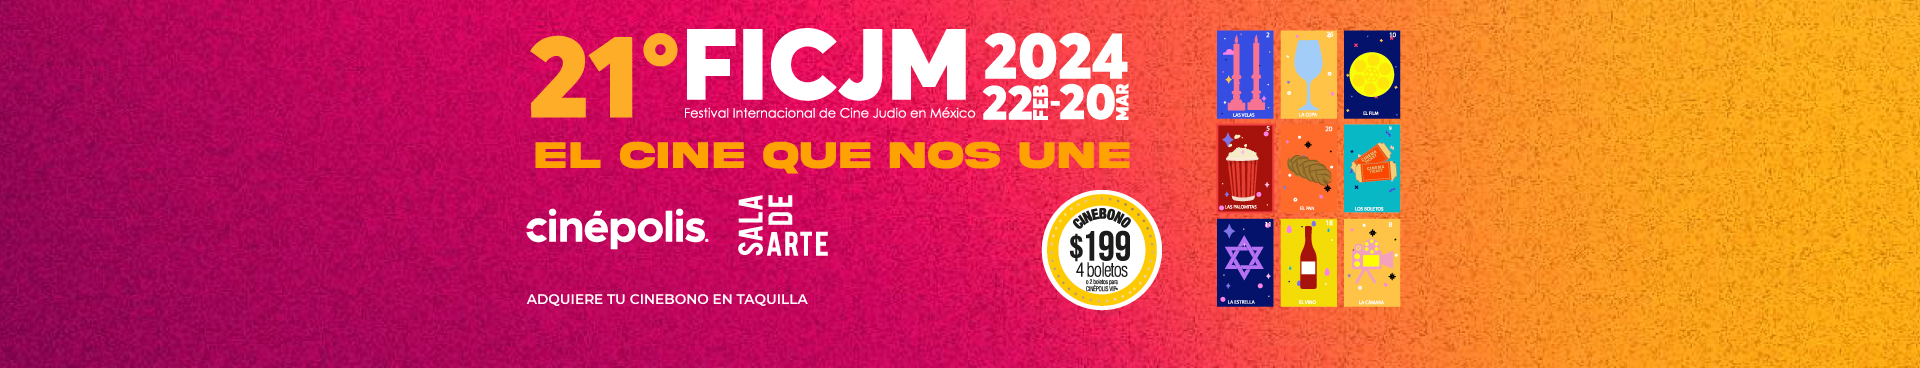 21 Festival Internacional de Cine Judío en México